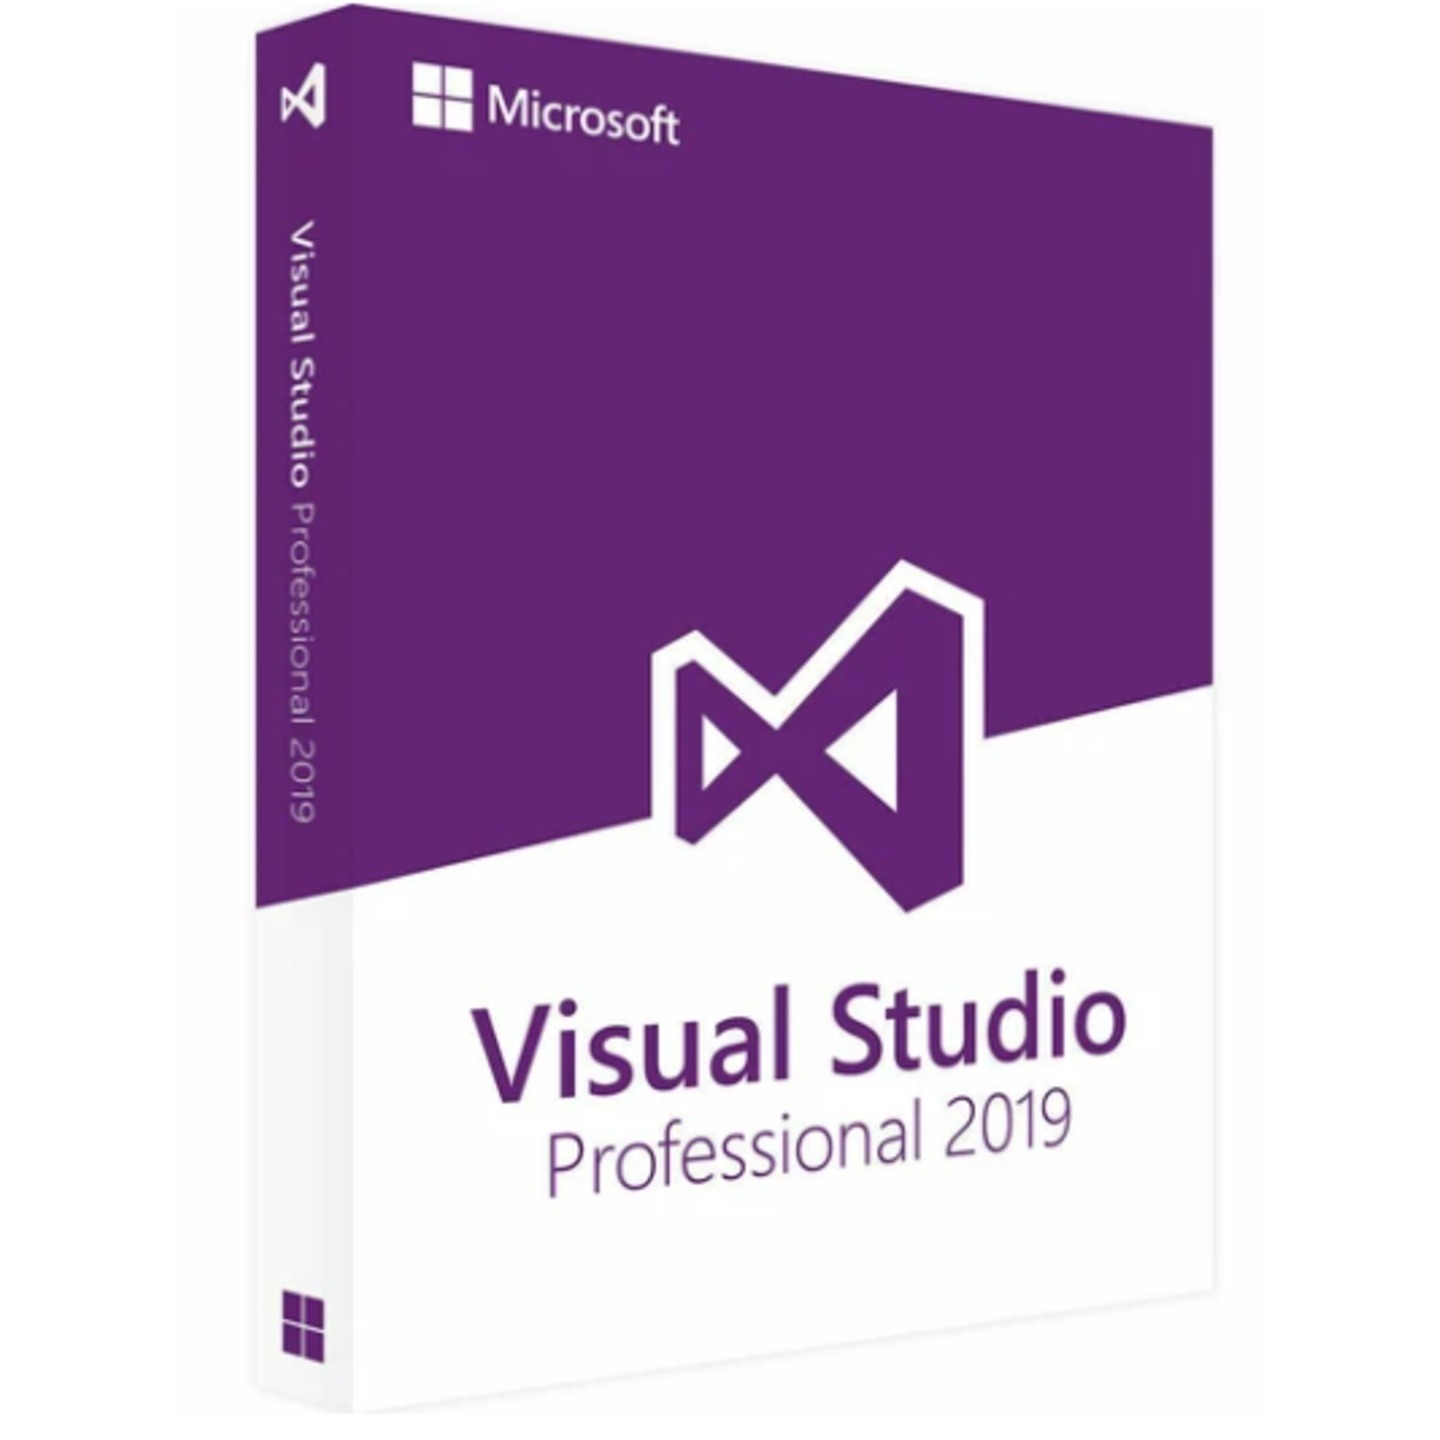 download visual studio professional 2019 for windows 10 64 bit